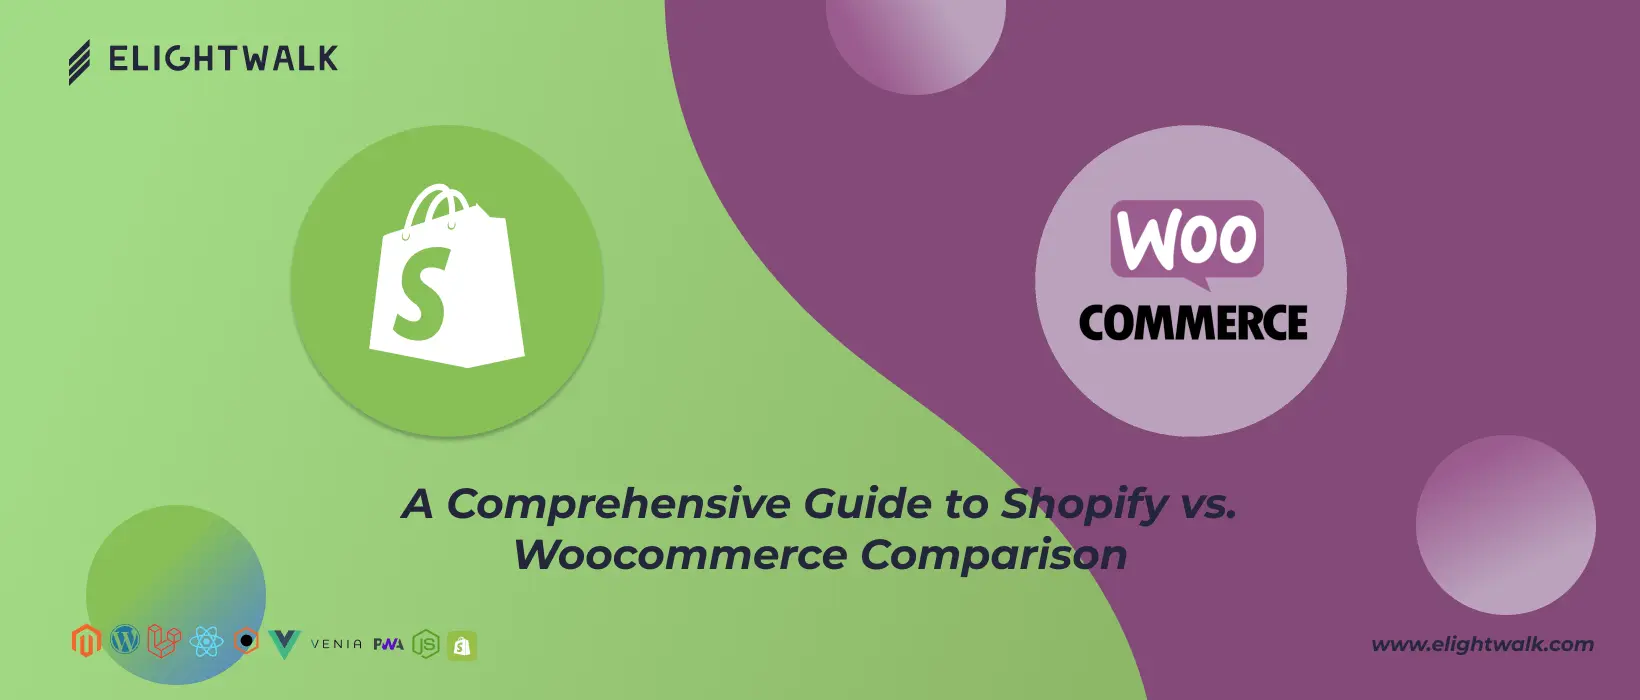 Shopify vs. Woocommerce Comparison Guide